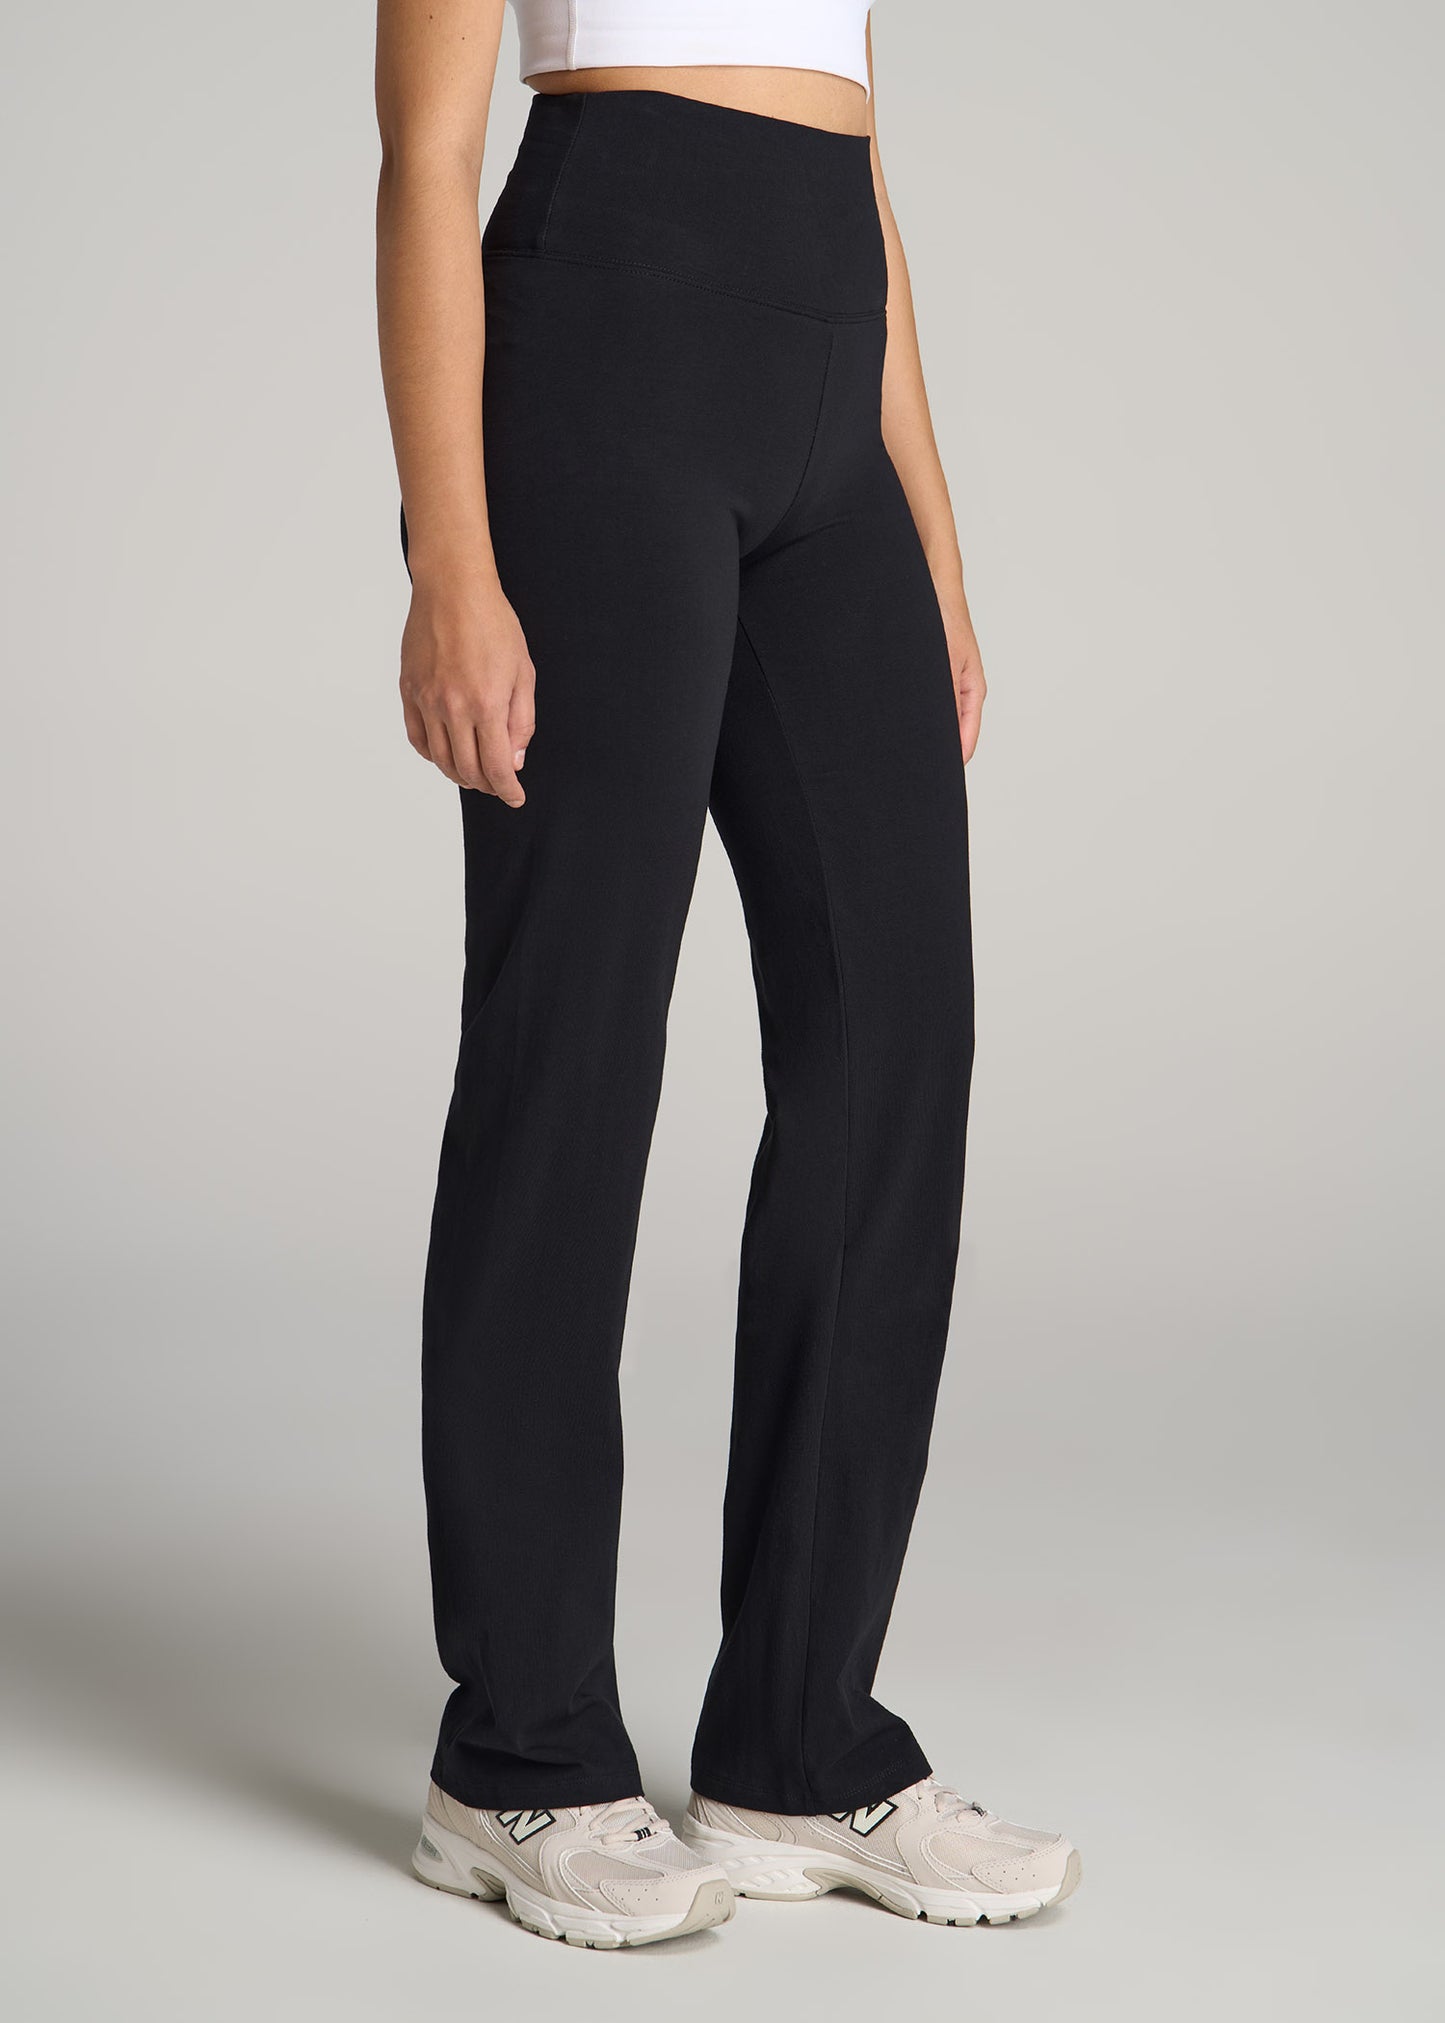  Side Pockets,Womens Straight Leg Yoga Pants Slim Fit Workout  Pants,37,Black,S